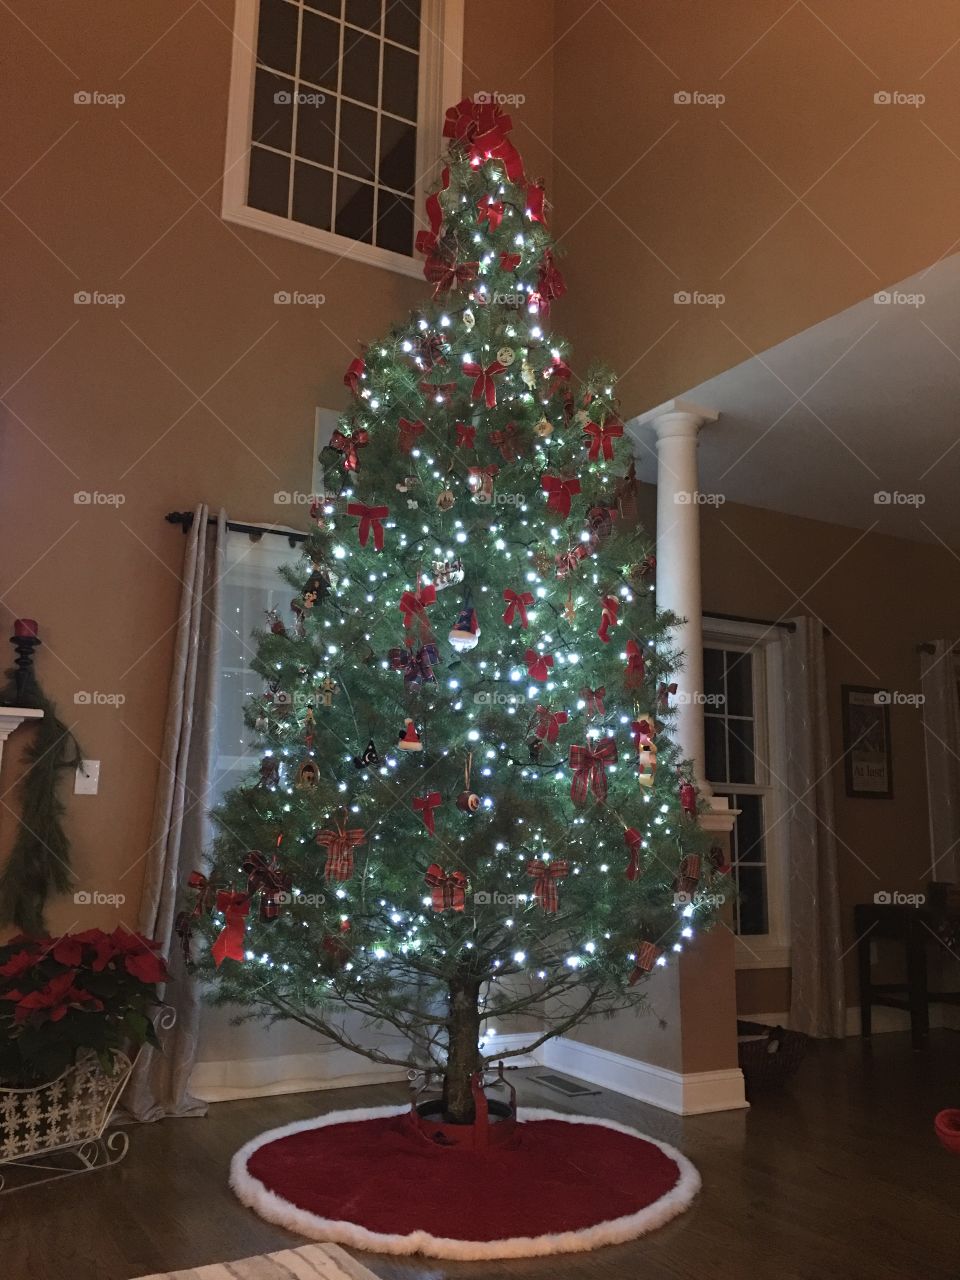 Connecticut Christmas tree 